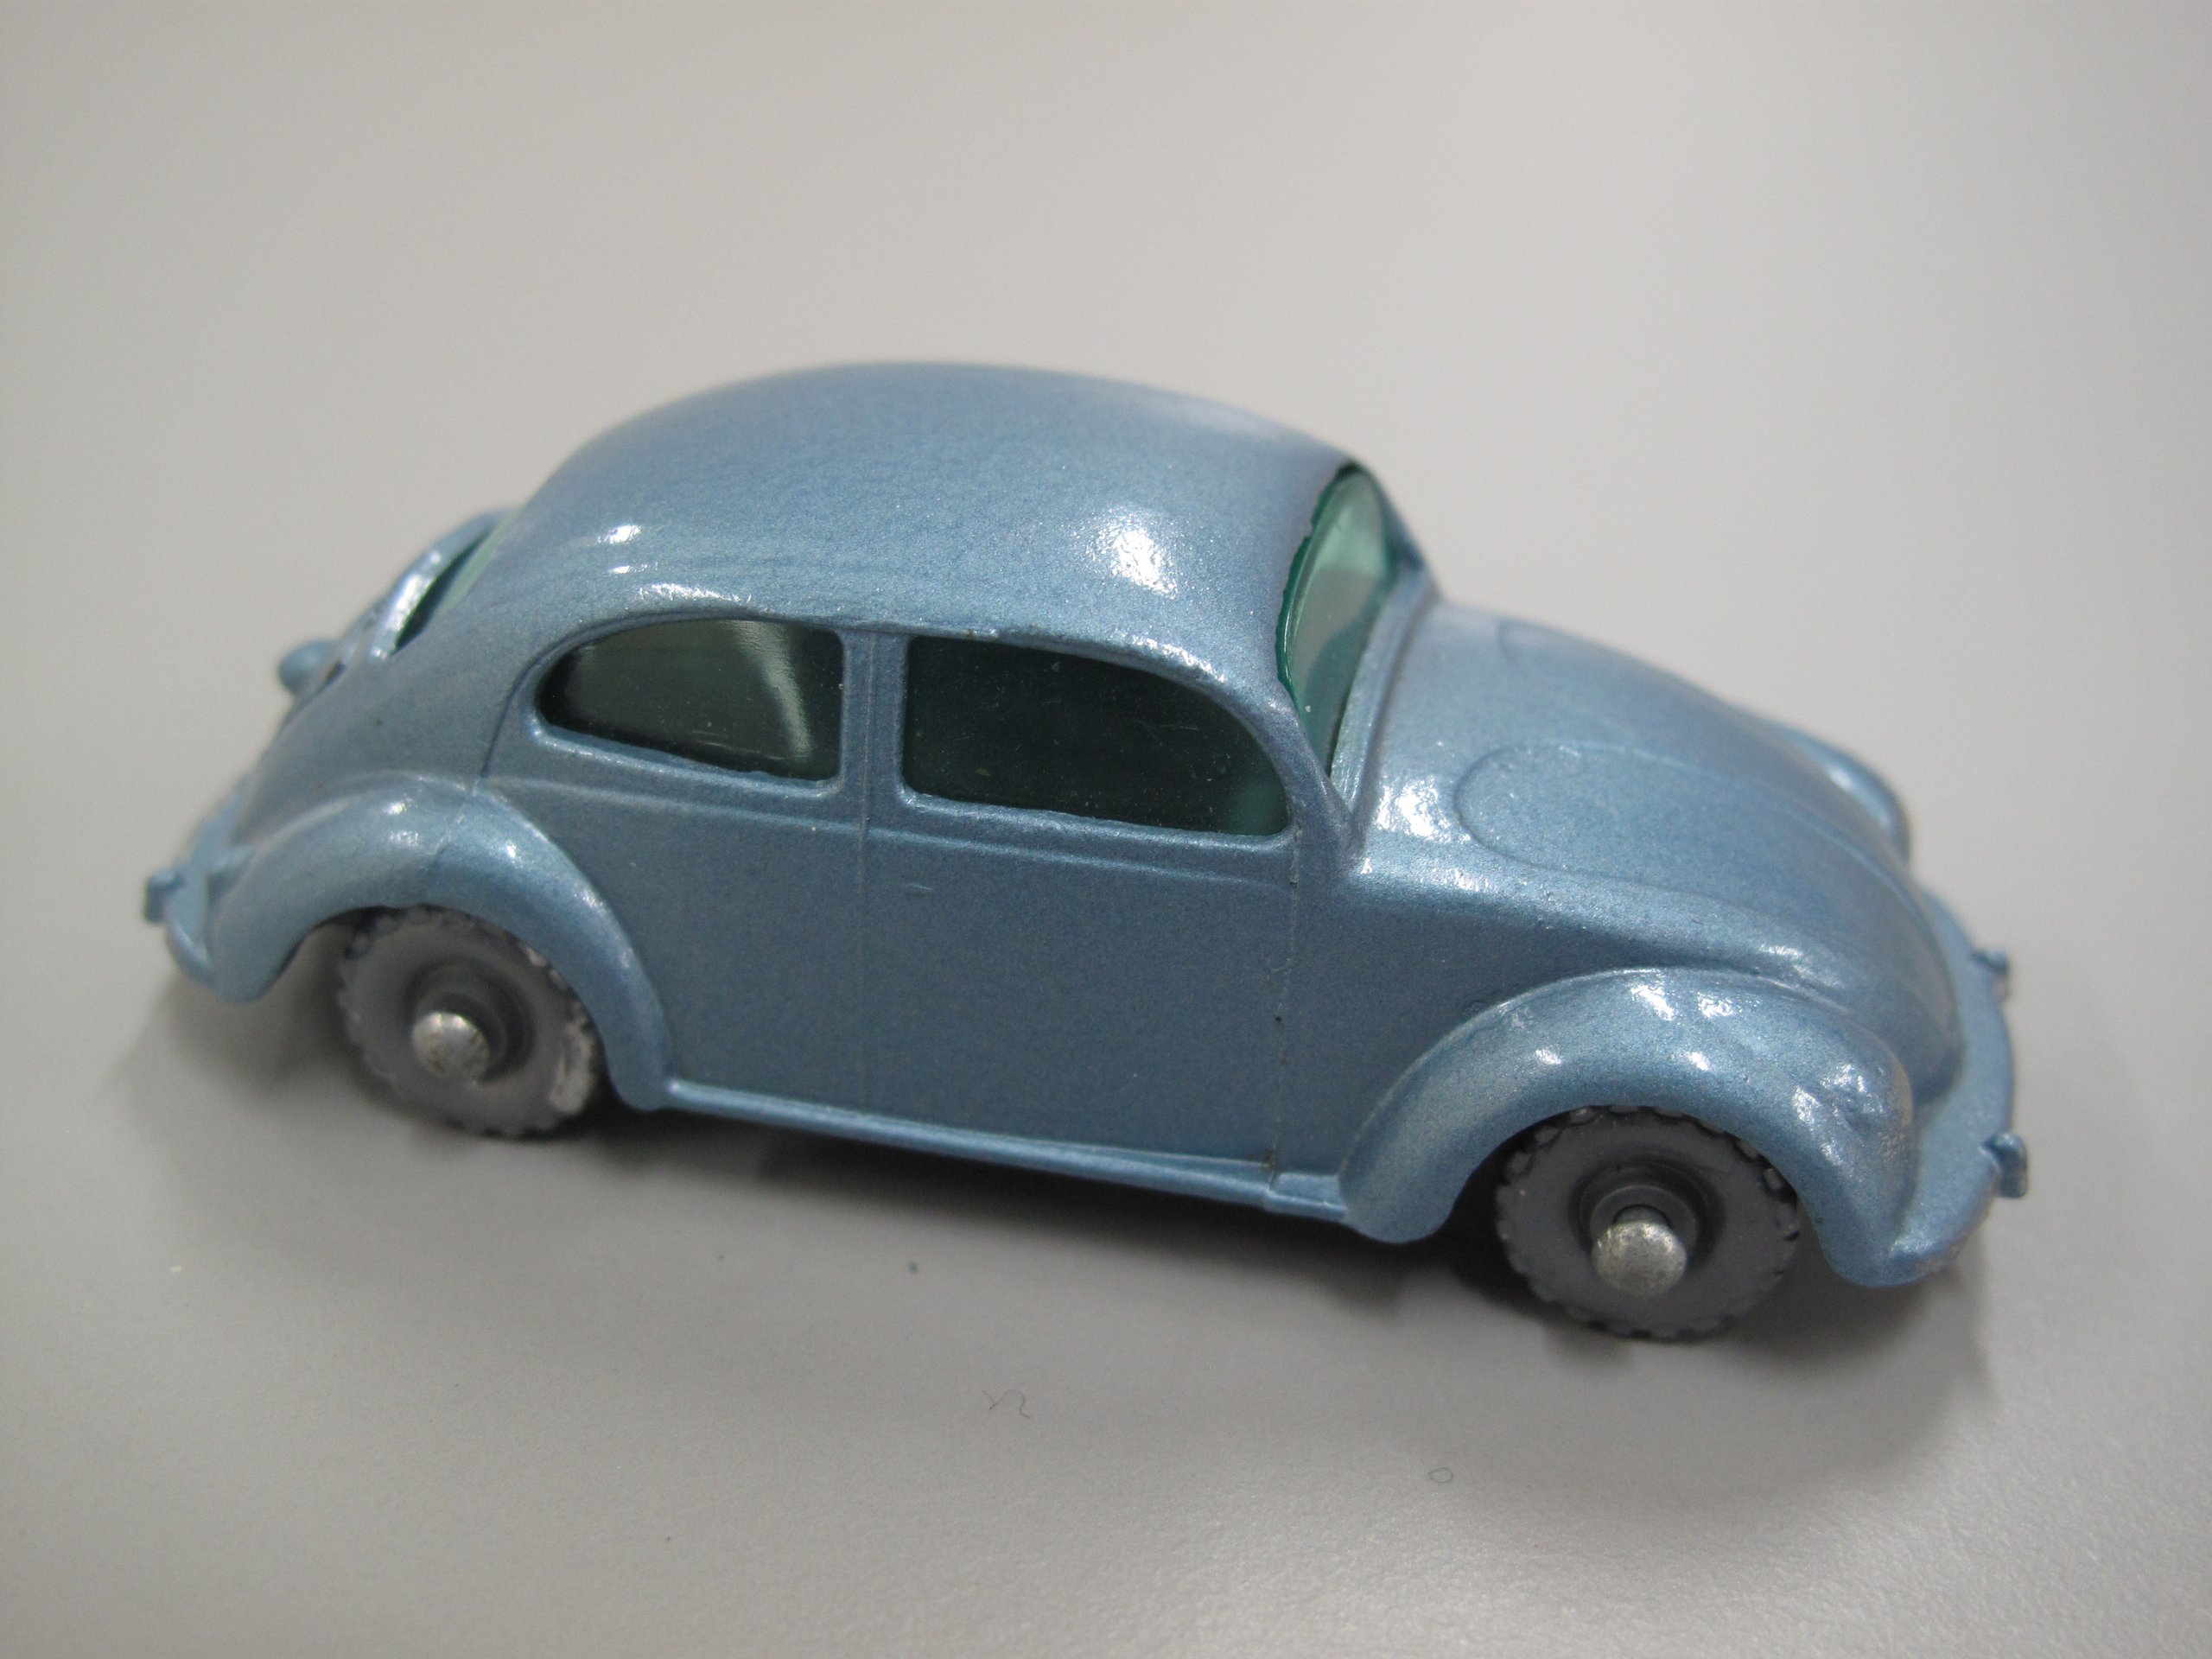 Powerhouse Collection - Matchbox car 'Volkswagen Sedan'